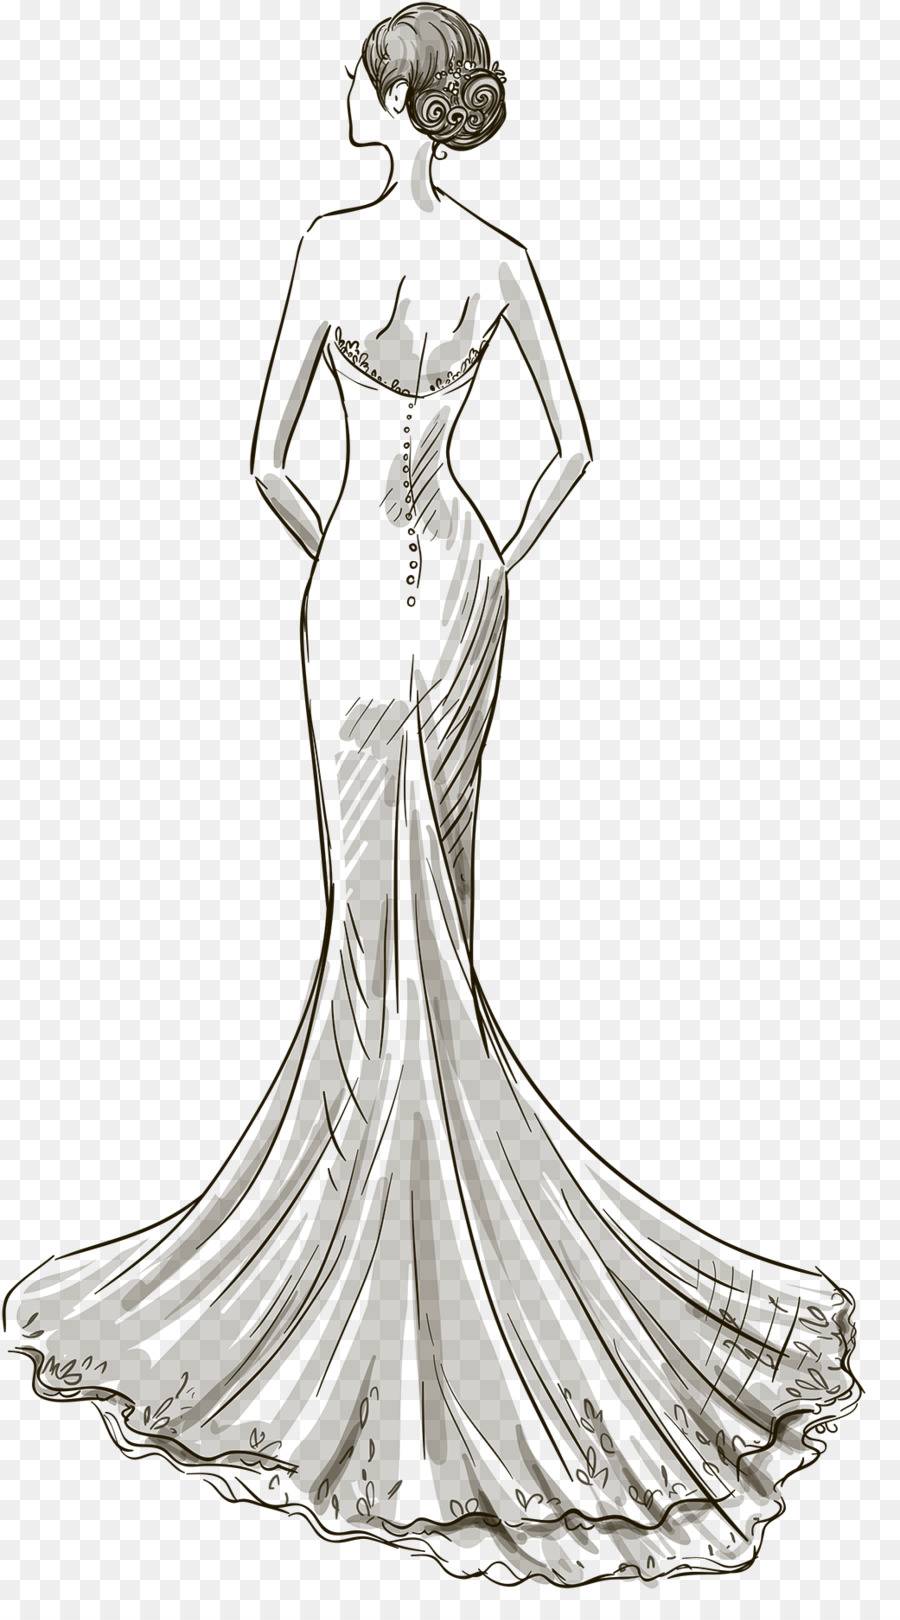 Wedding dress Drawing - dress png download - 1041*1854 - Free Transparent Wedding Dress png Download.